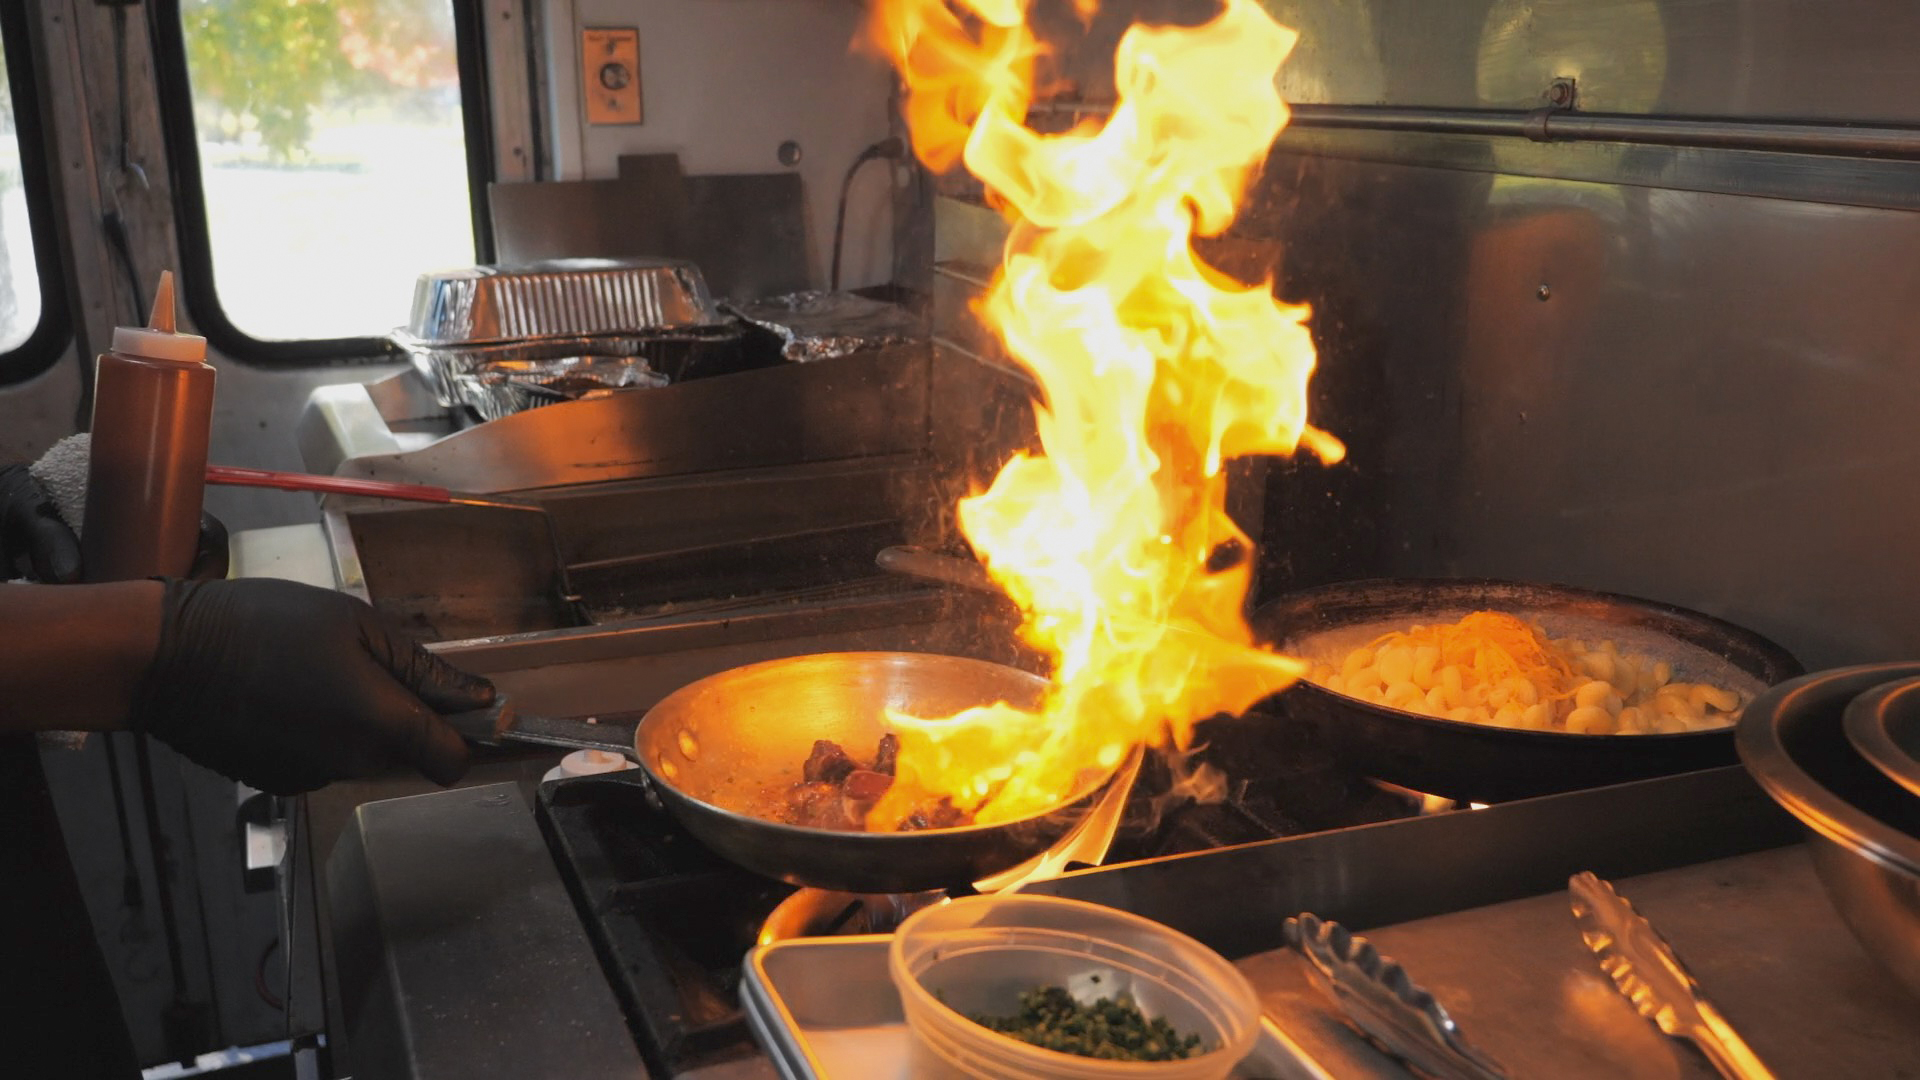 A saucepan erupts in flame